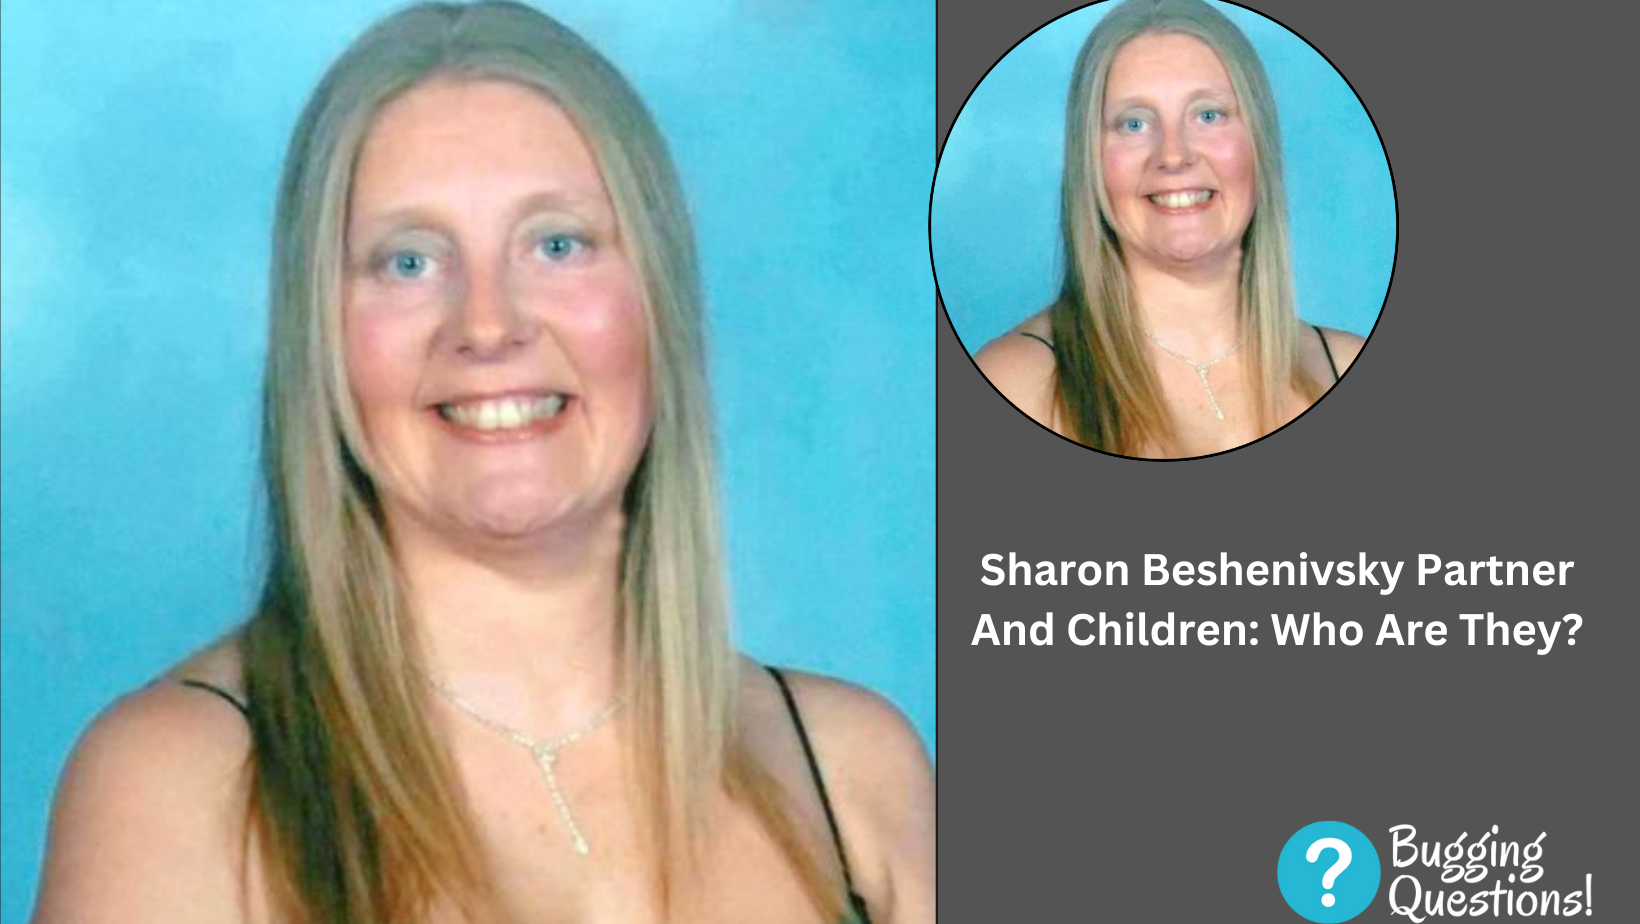 Sharon Beshenivsky Partner And Children: Who Are They?